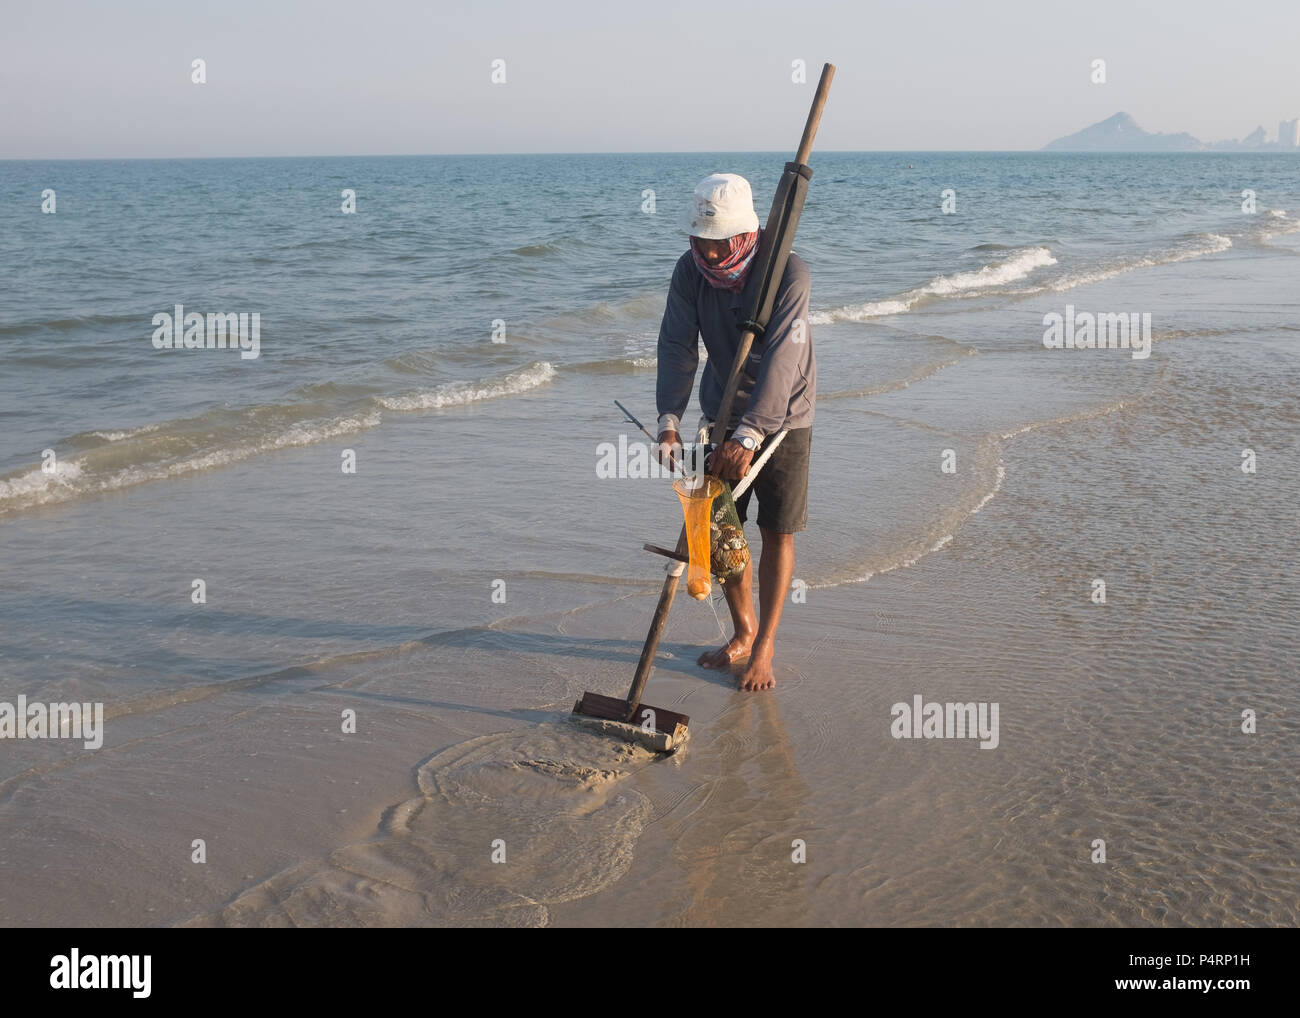 Man raking for clam shells on the beach, Prachuap Khiri Khan Province, Hua Hin, Thailand, Asia. Stock Photo